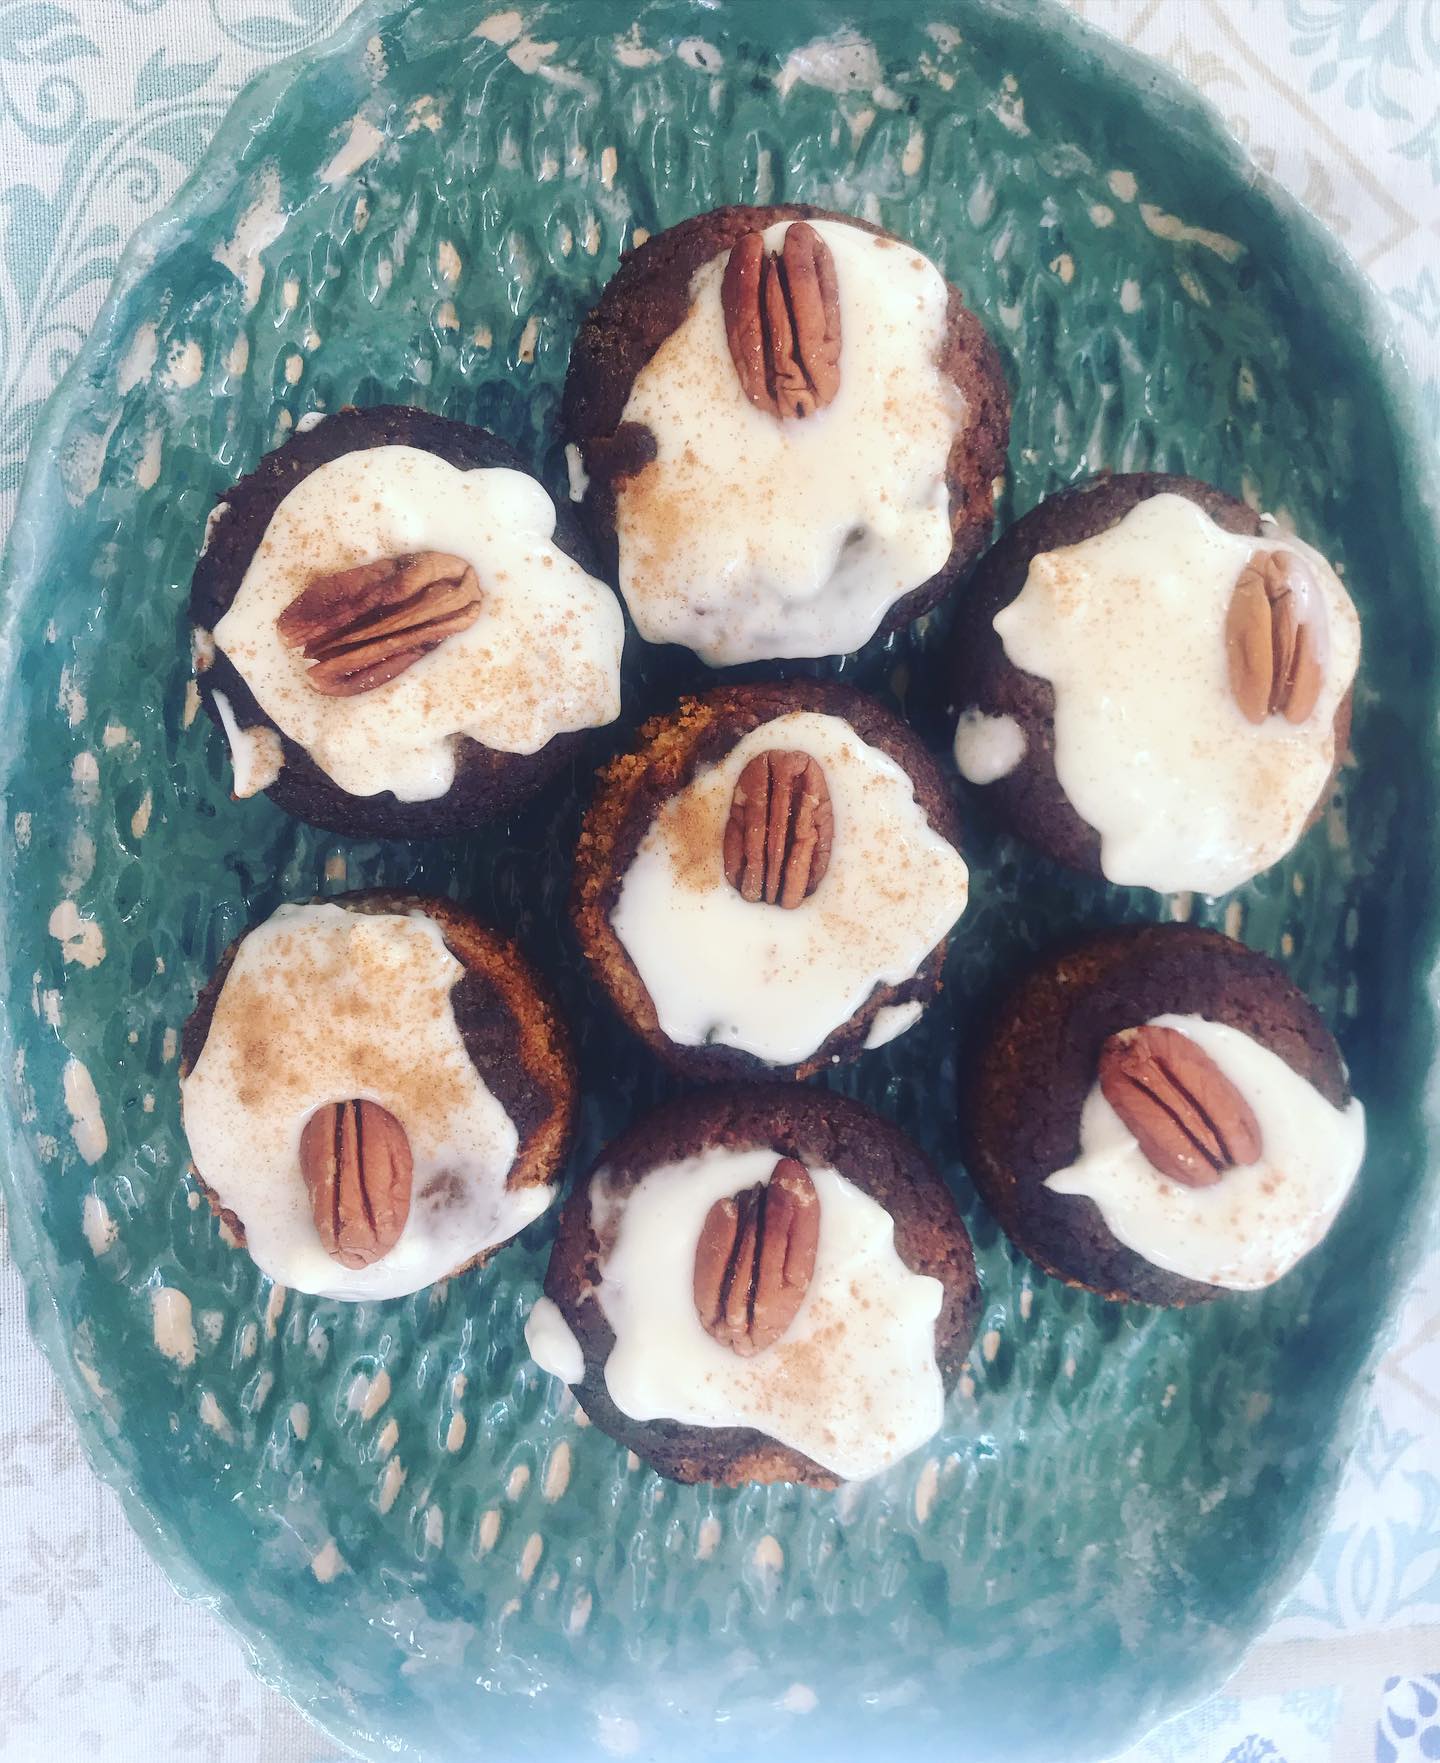  muffins με καρύδια Πεκάν